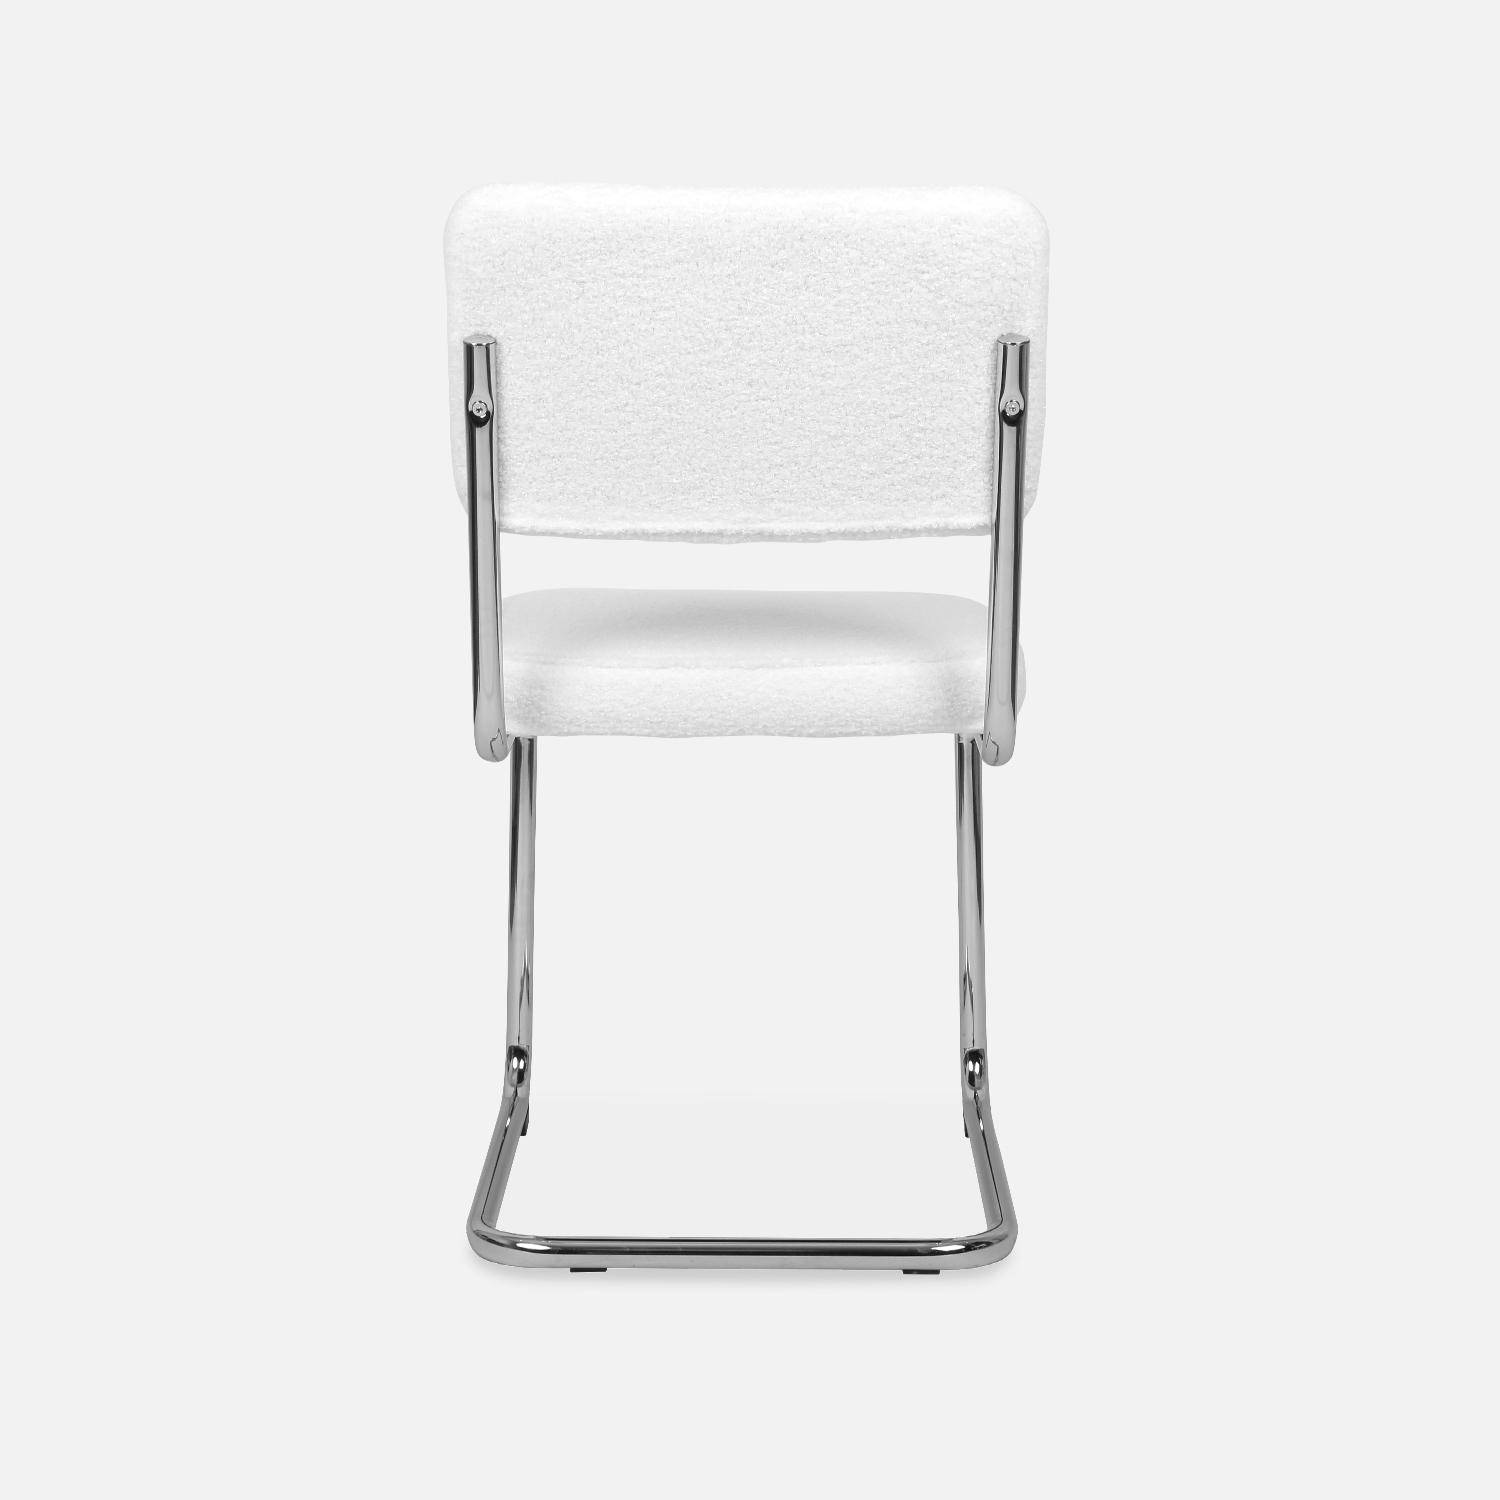 2 sillas voladizas - Maja - con rizos blancos, 46 x 54,5 x 84,5cm   Photo6